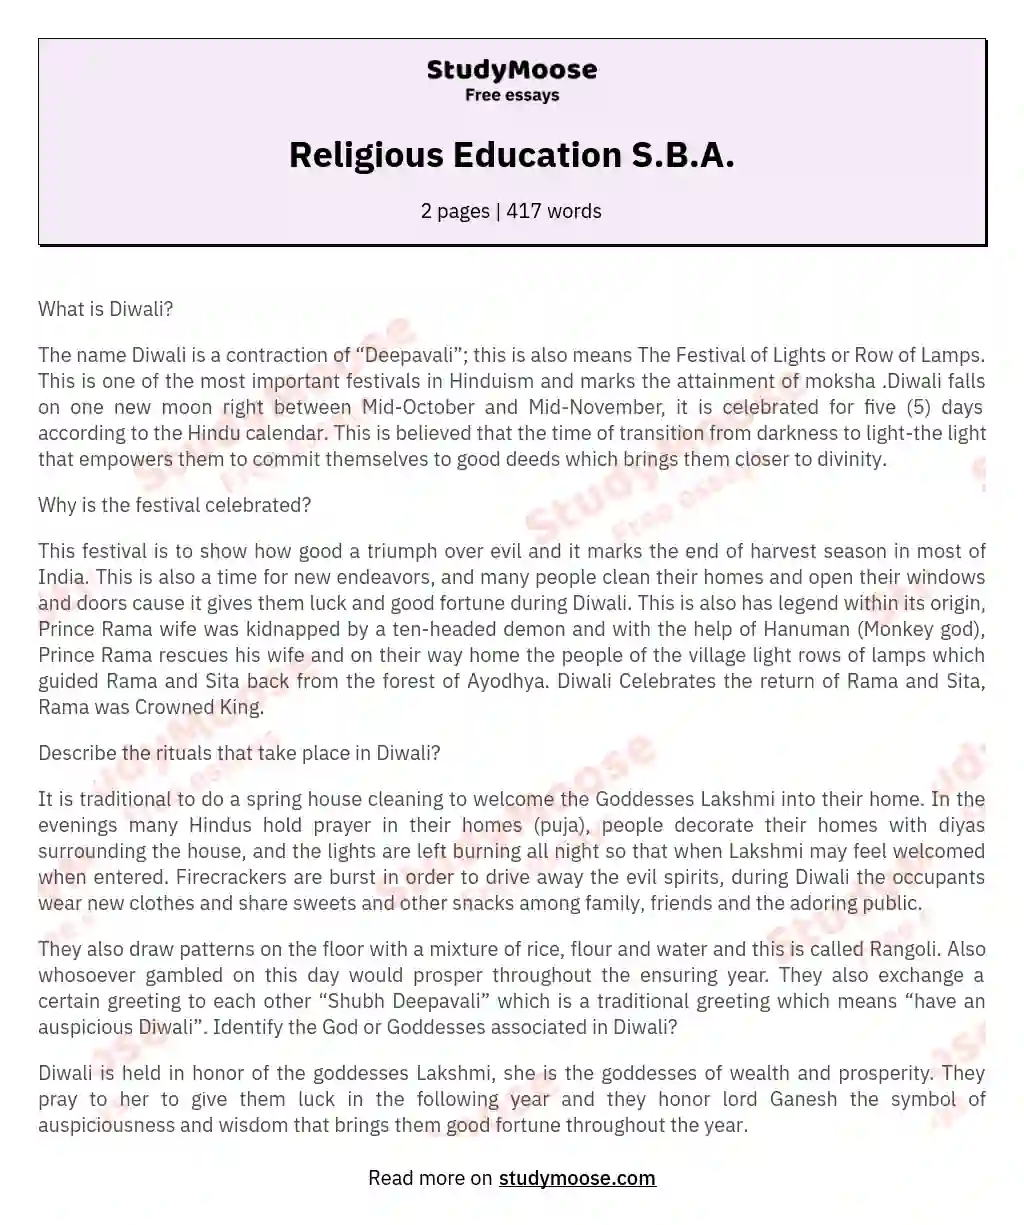 Religious Education S.B.A. essay